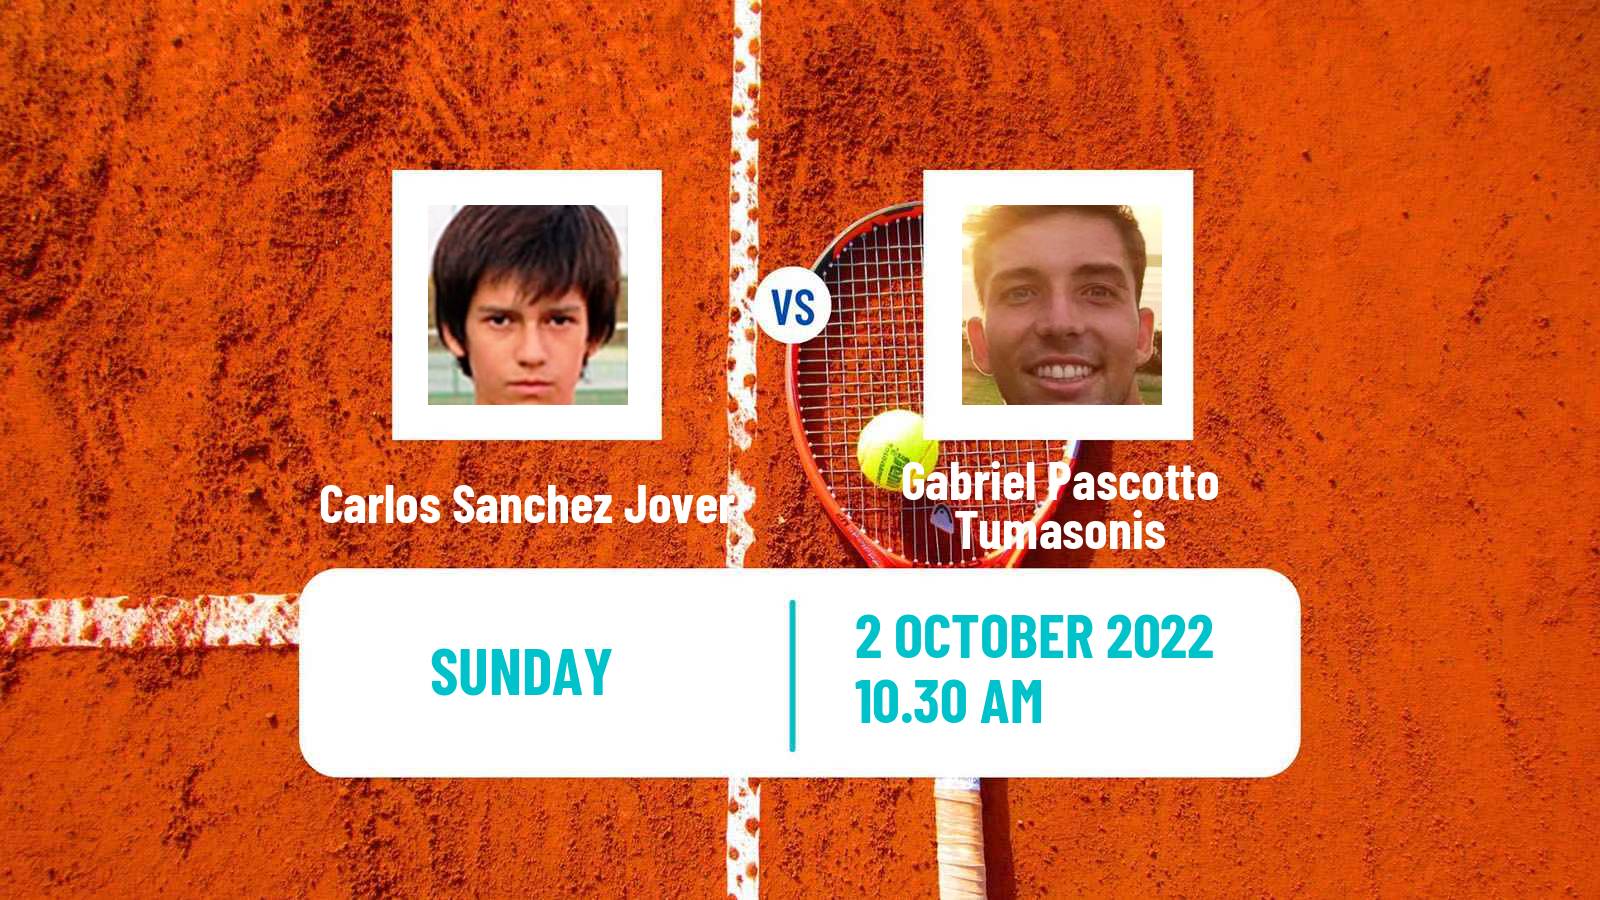 Tennis ATP Challenger Carlos Sanchez Jover - Gabriel Pascotto Tumasonis